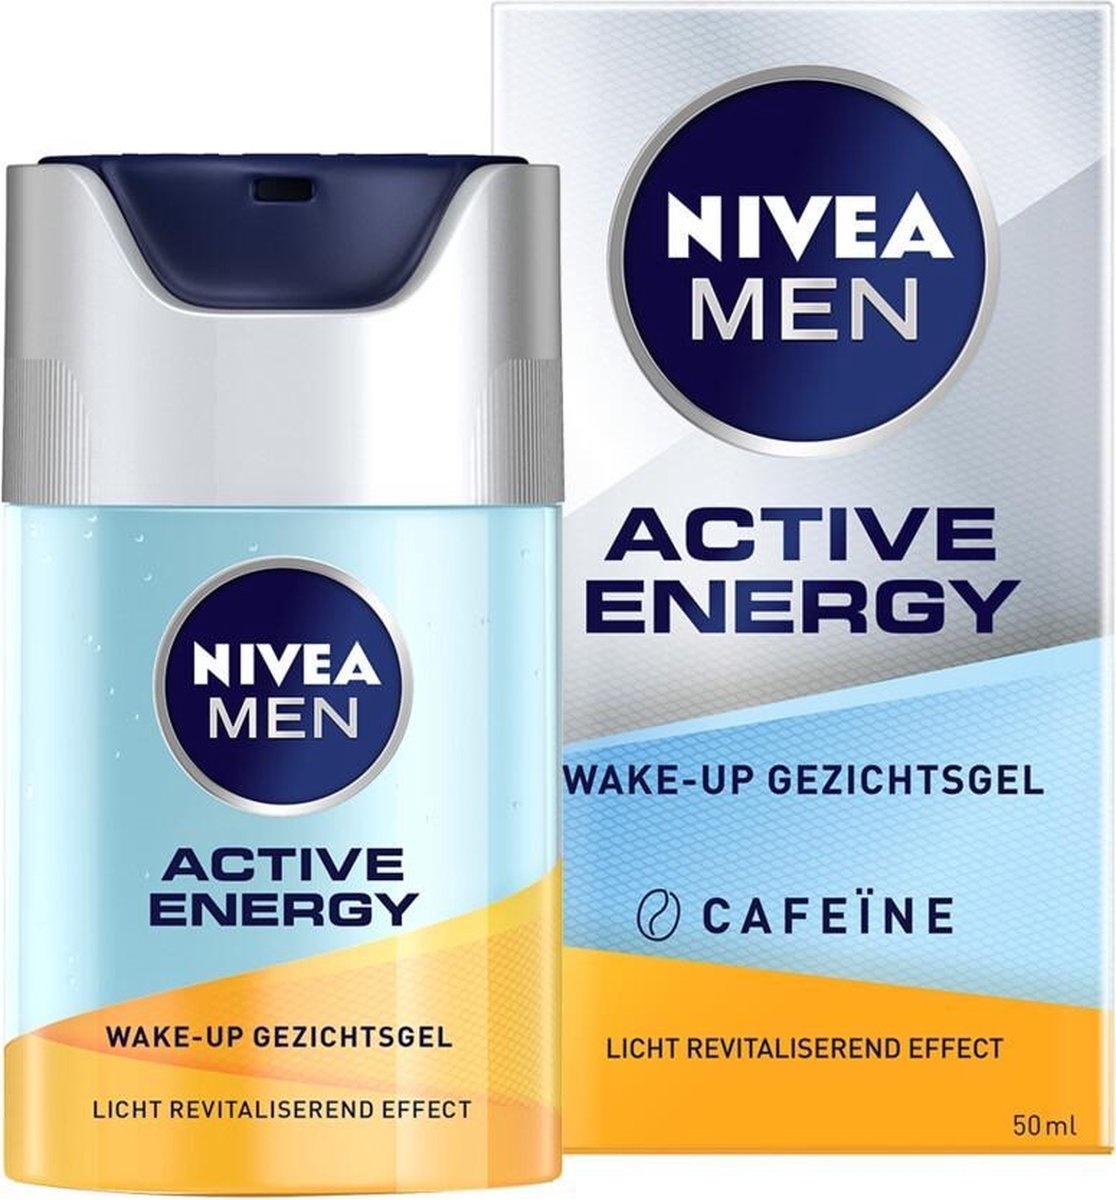 NIVEA MEN Active Energy Wake-up Facial Gel - 50 ml